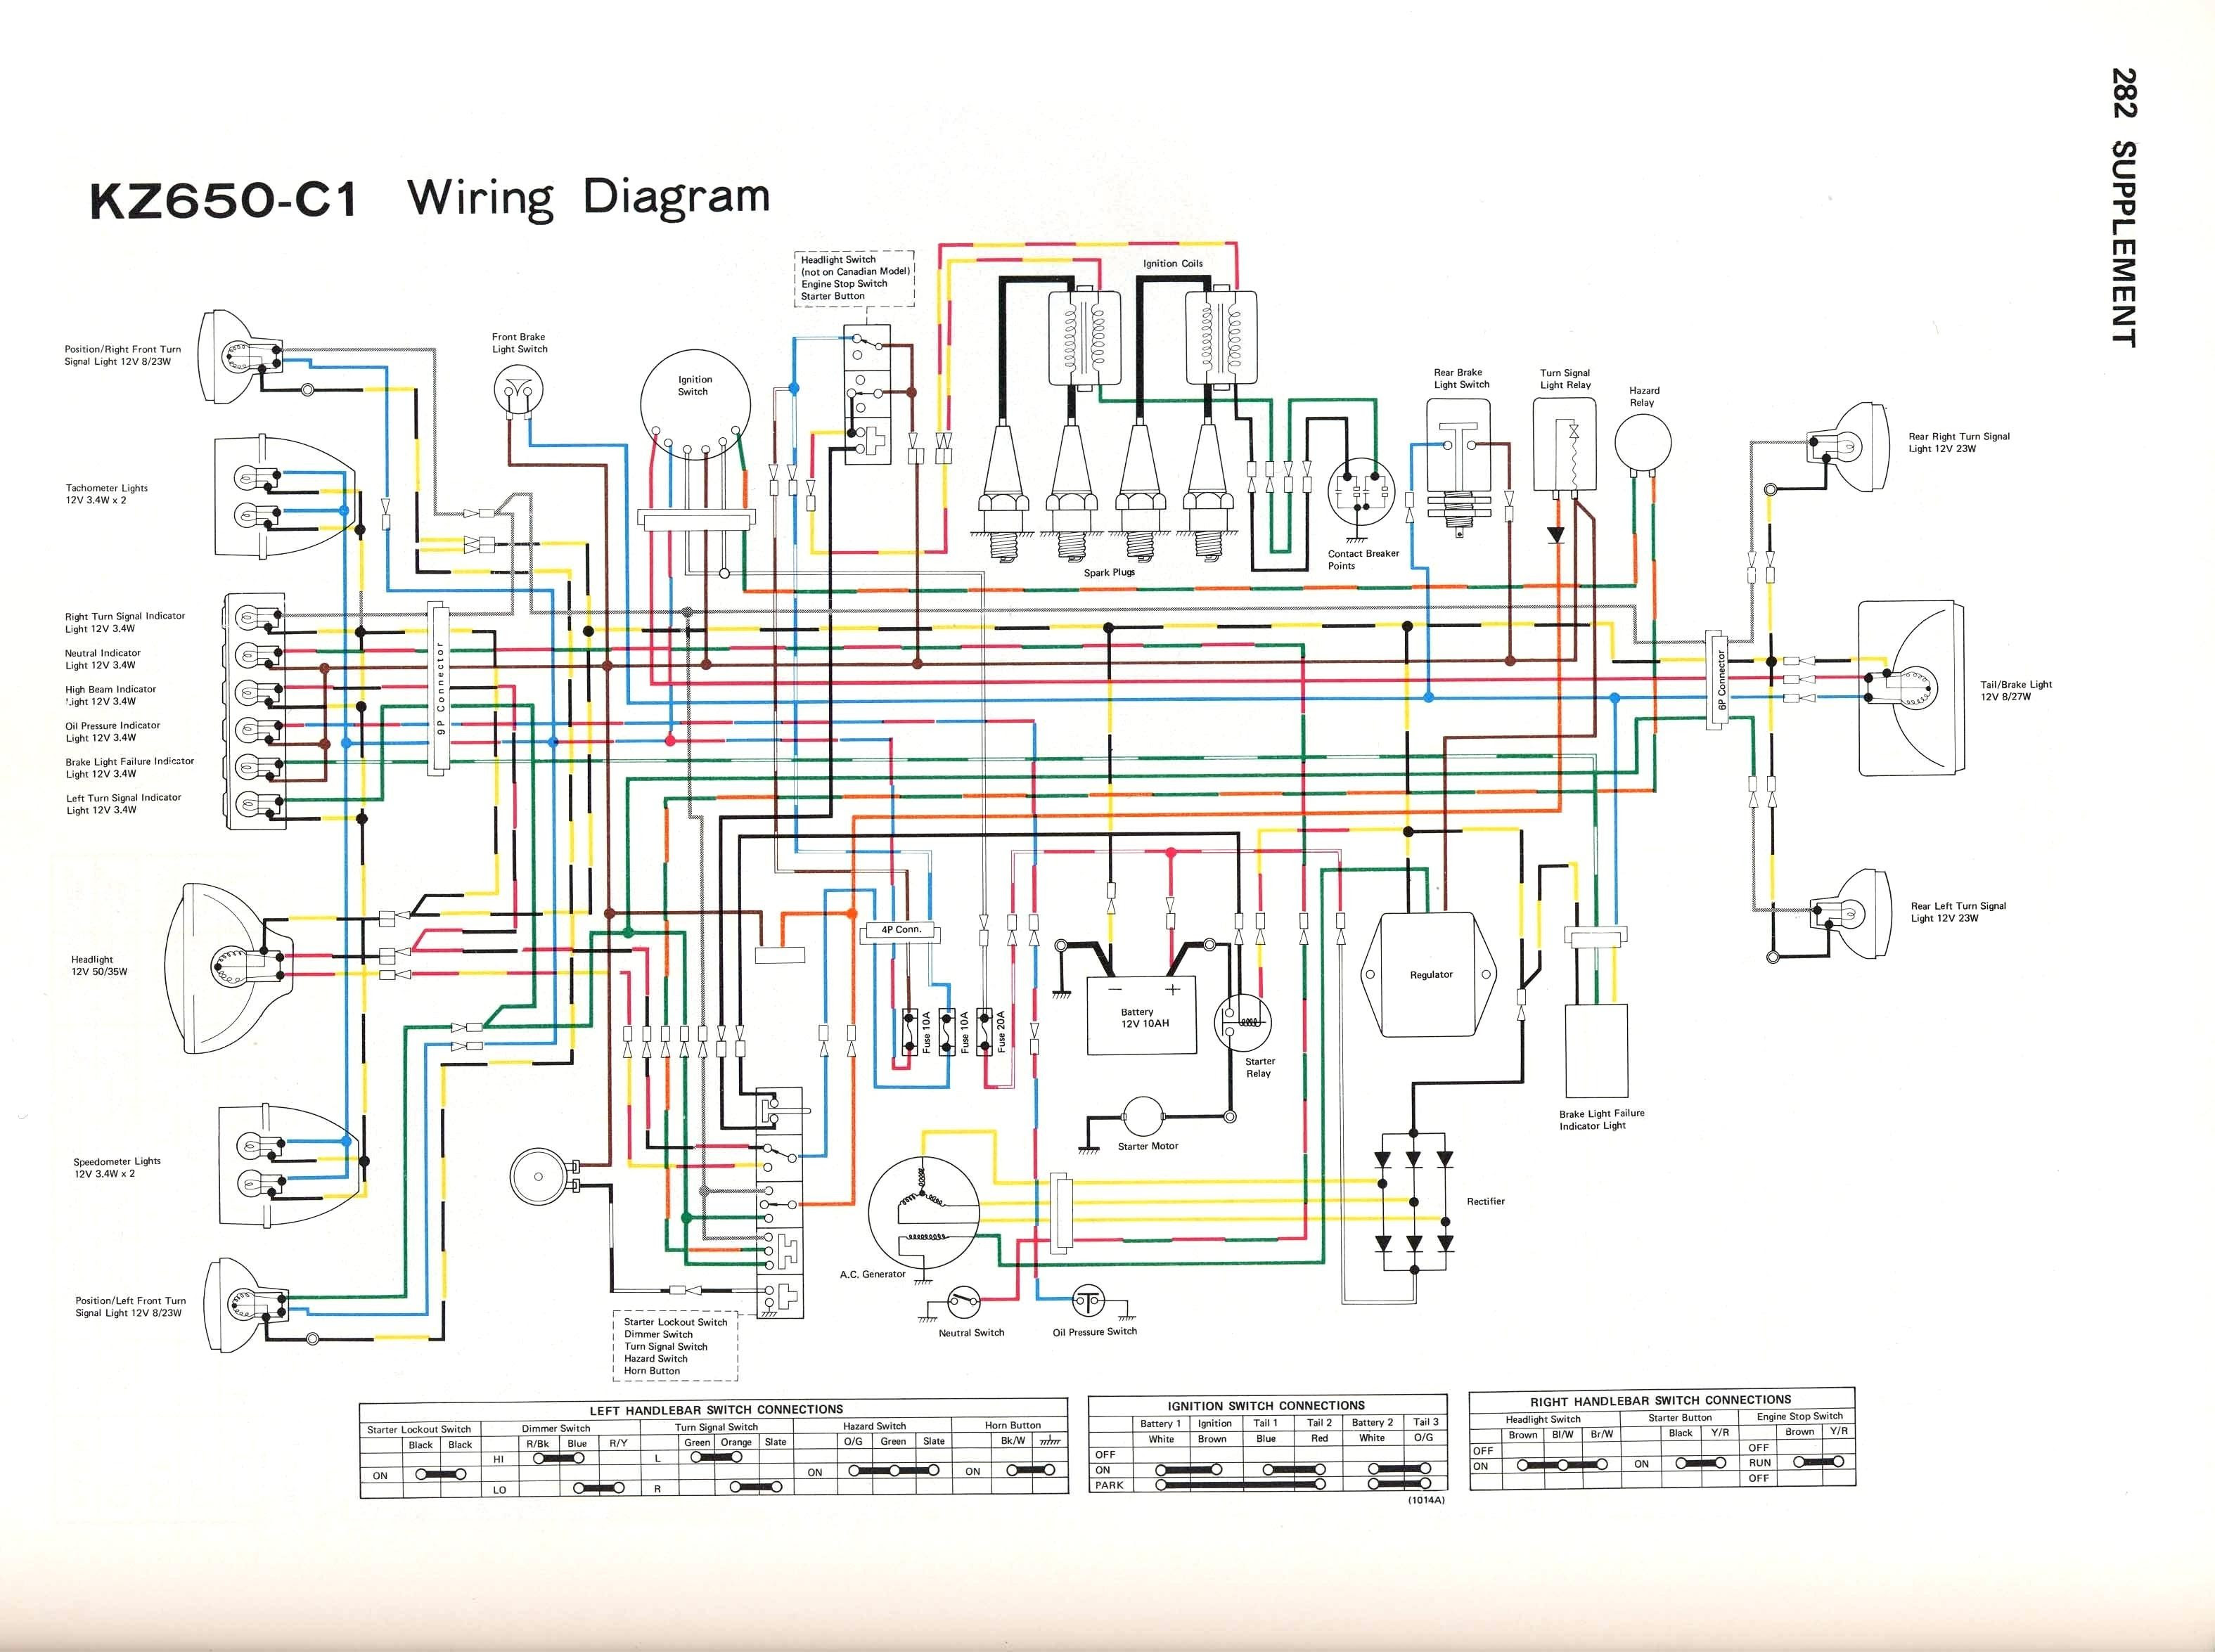 1998 Kawasaki Bayou 220 Wiring Diagram - Wiring Diagram Schemas